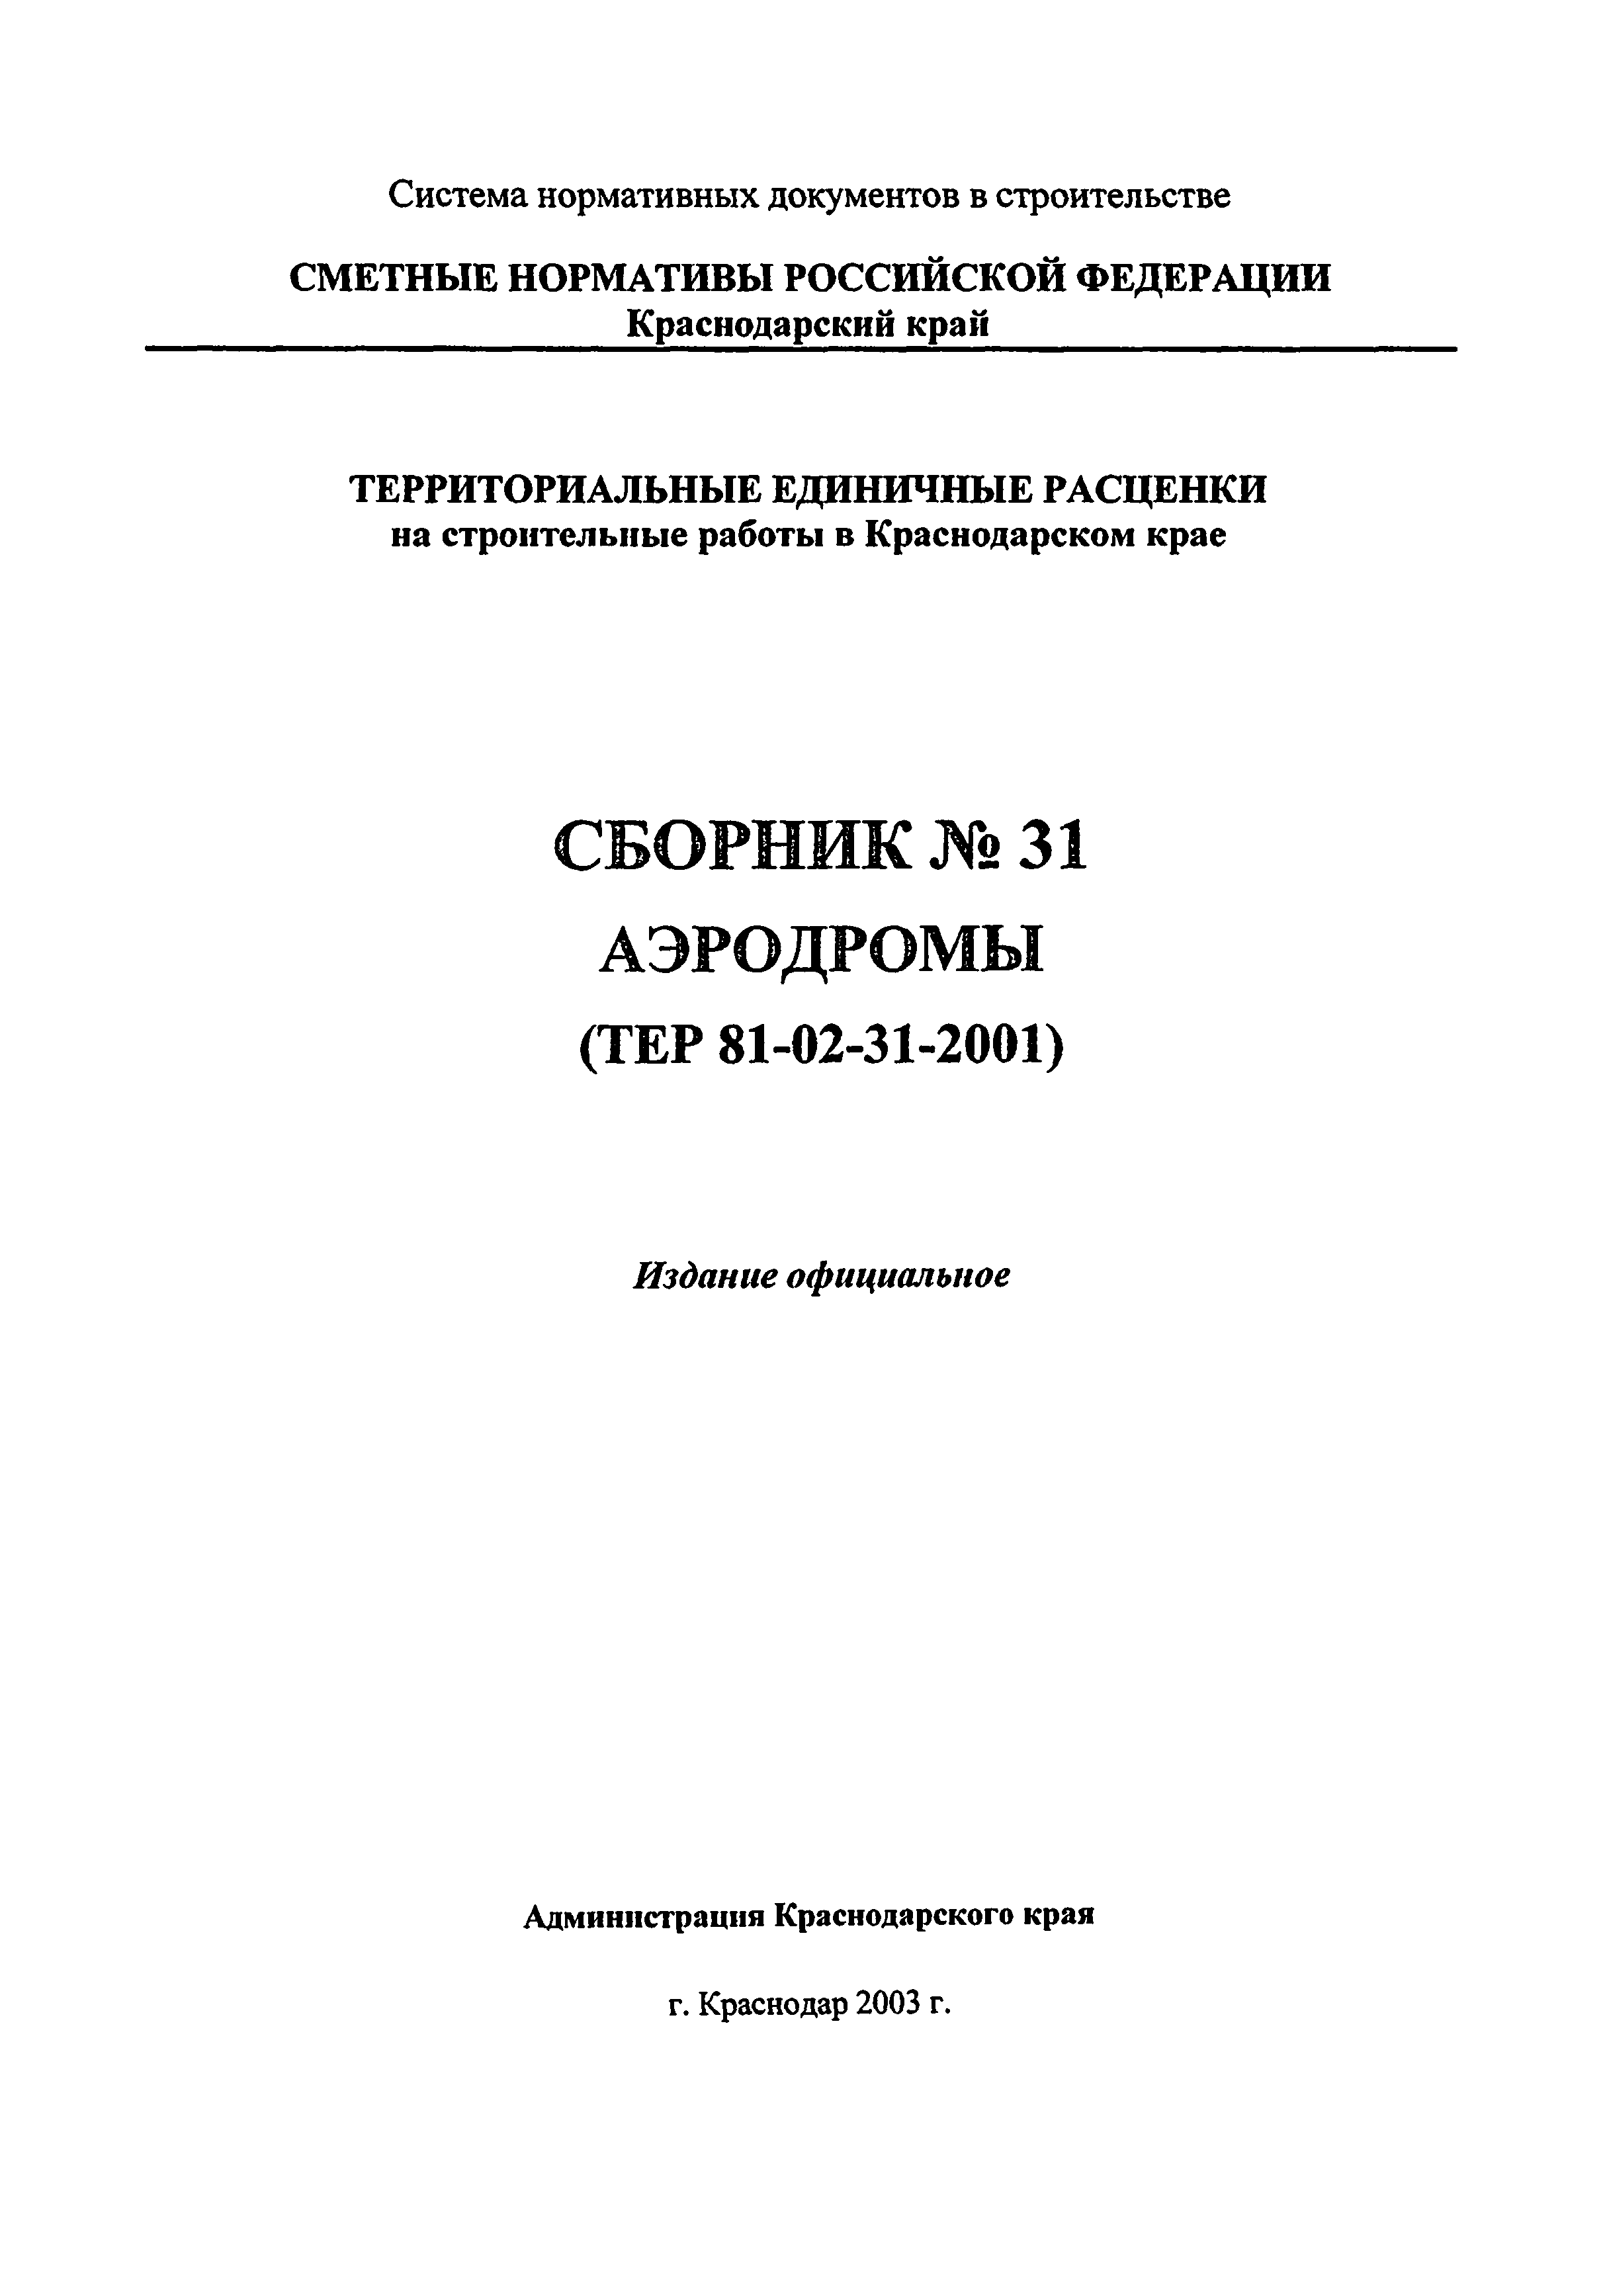 ТЕР Краснодарского края 2001-31